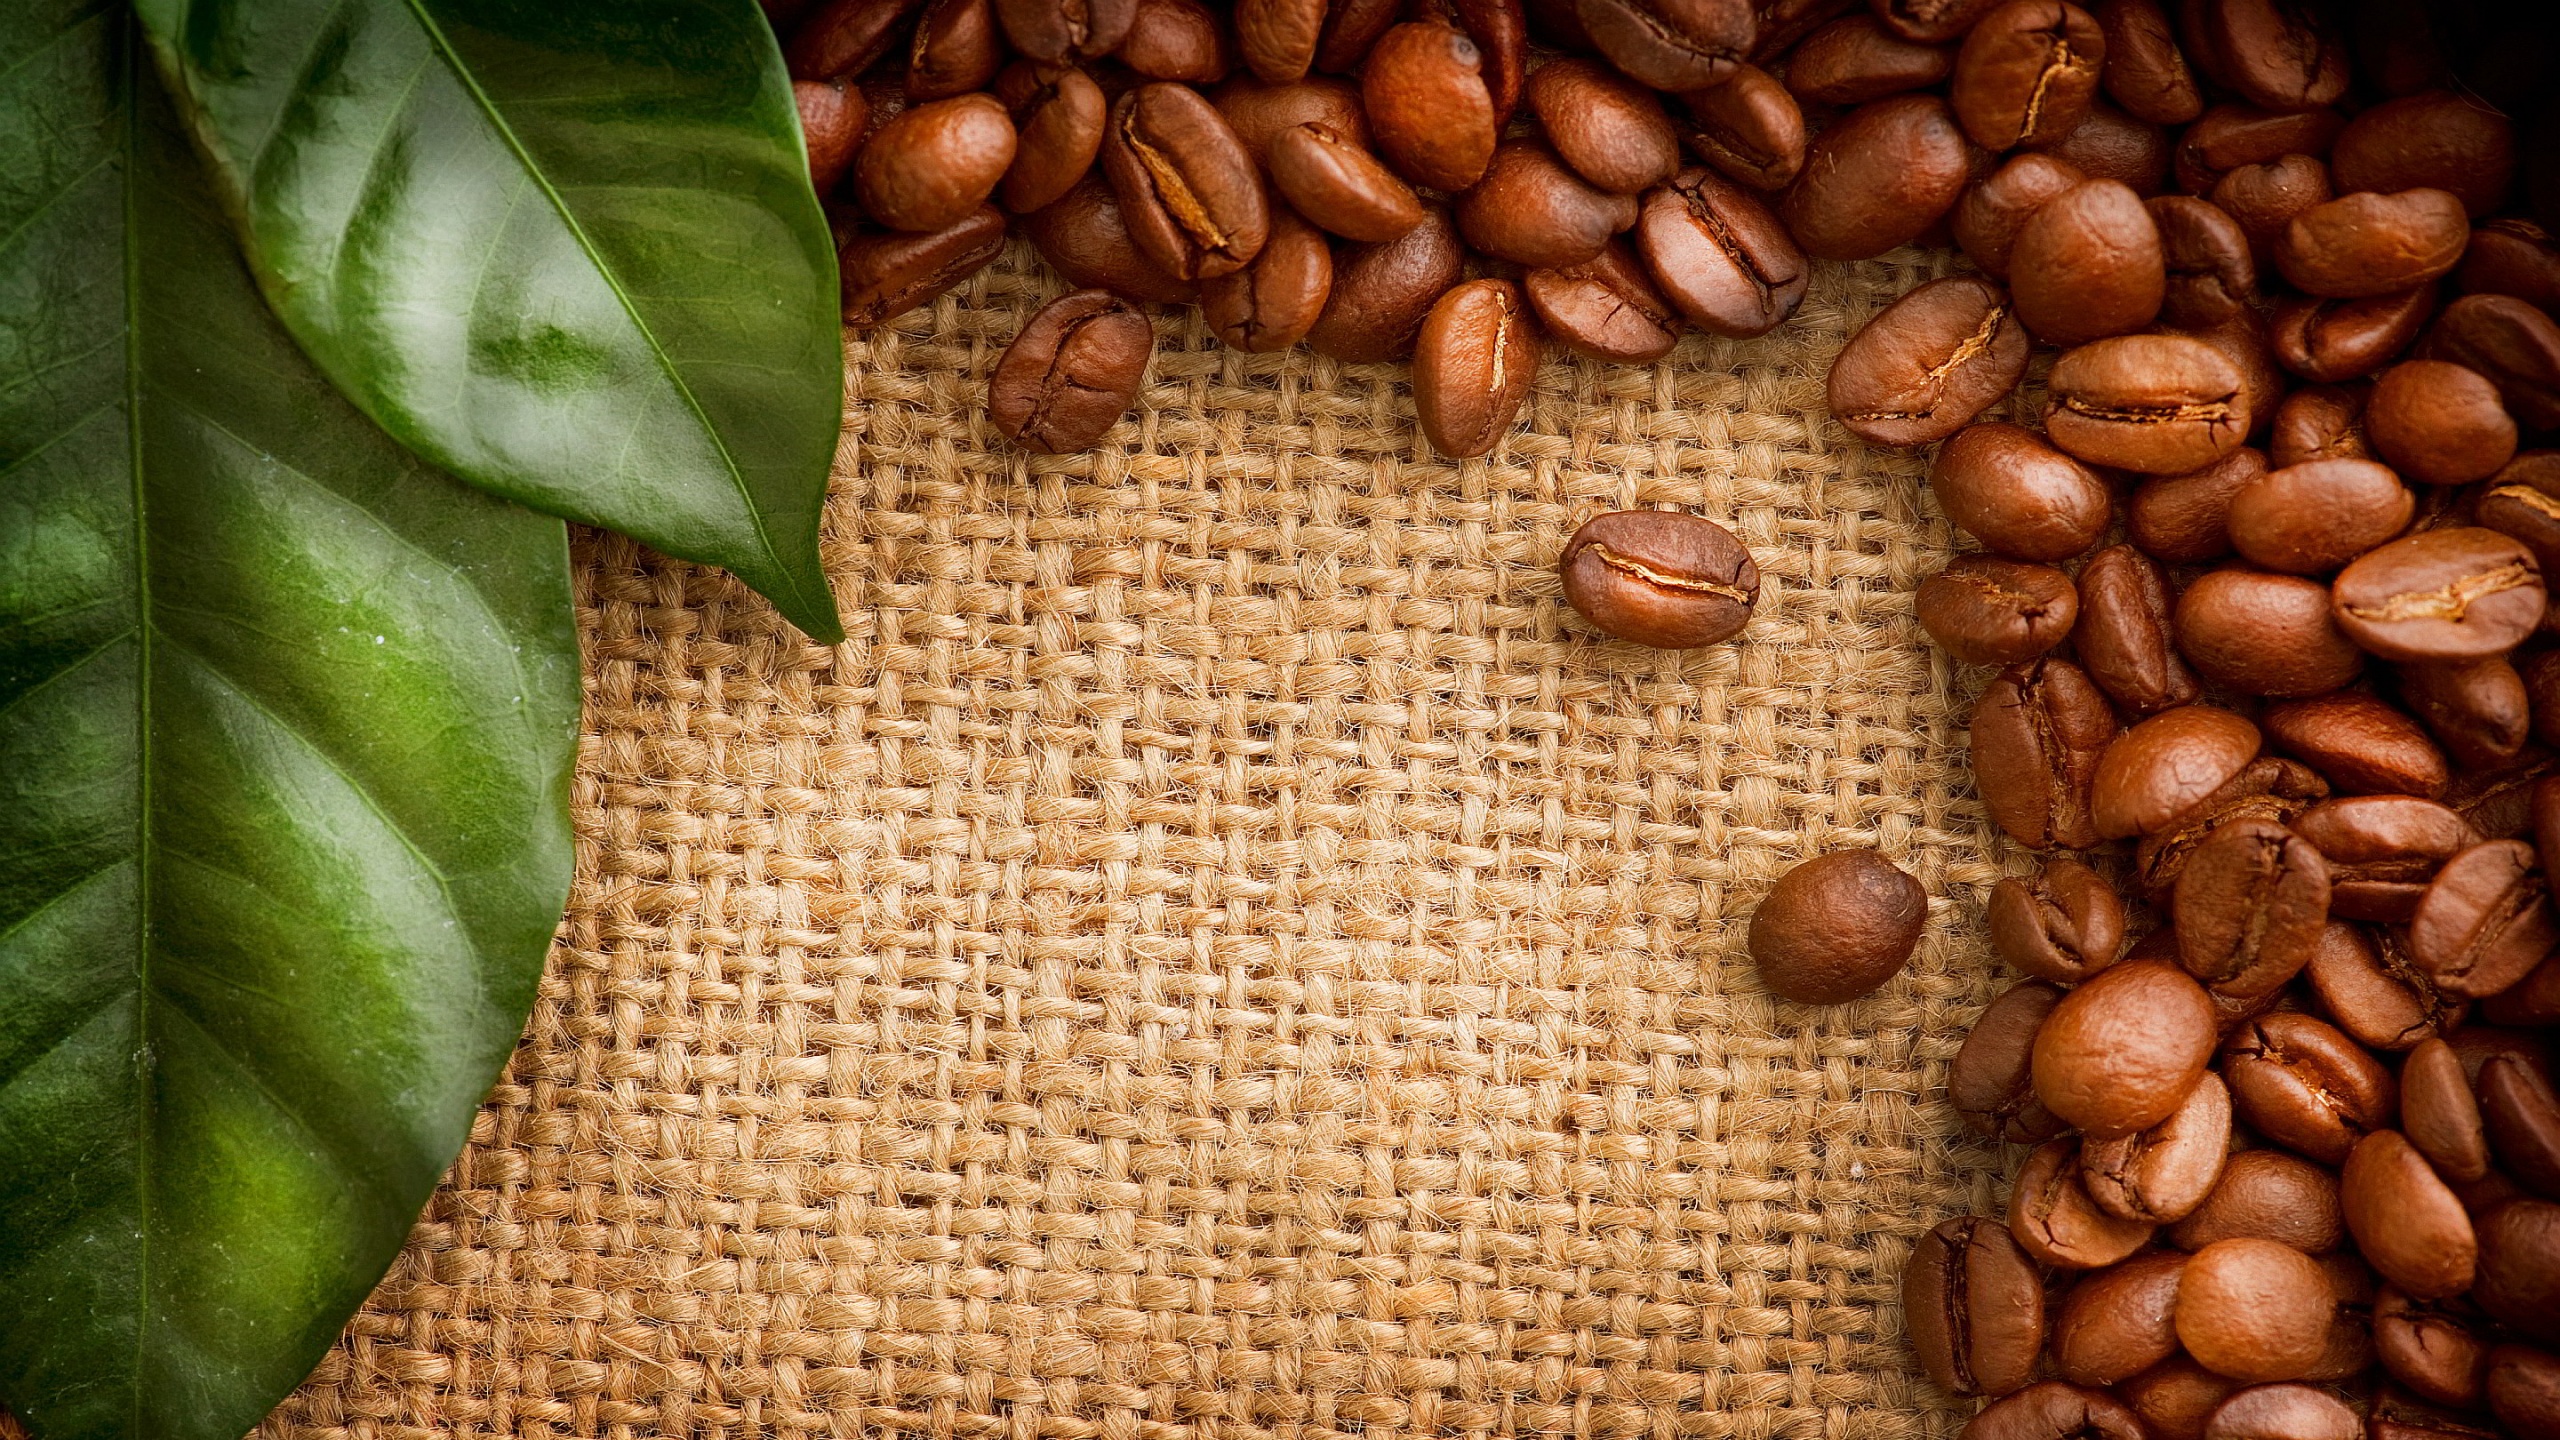 Coffee Beans, Best Coffee Beans Wallpaper, 2560x1440, 13292